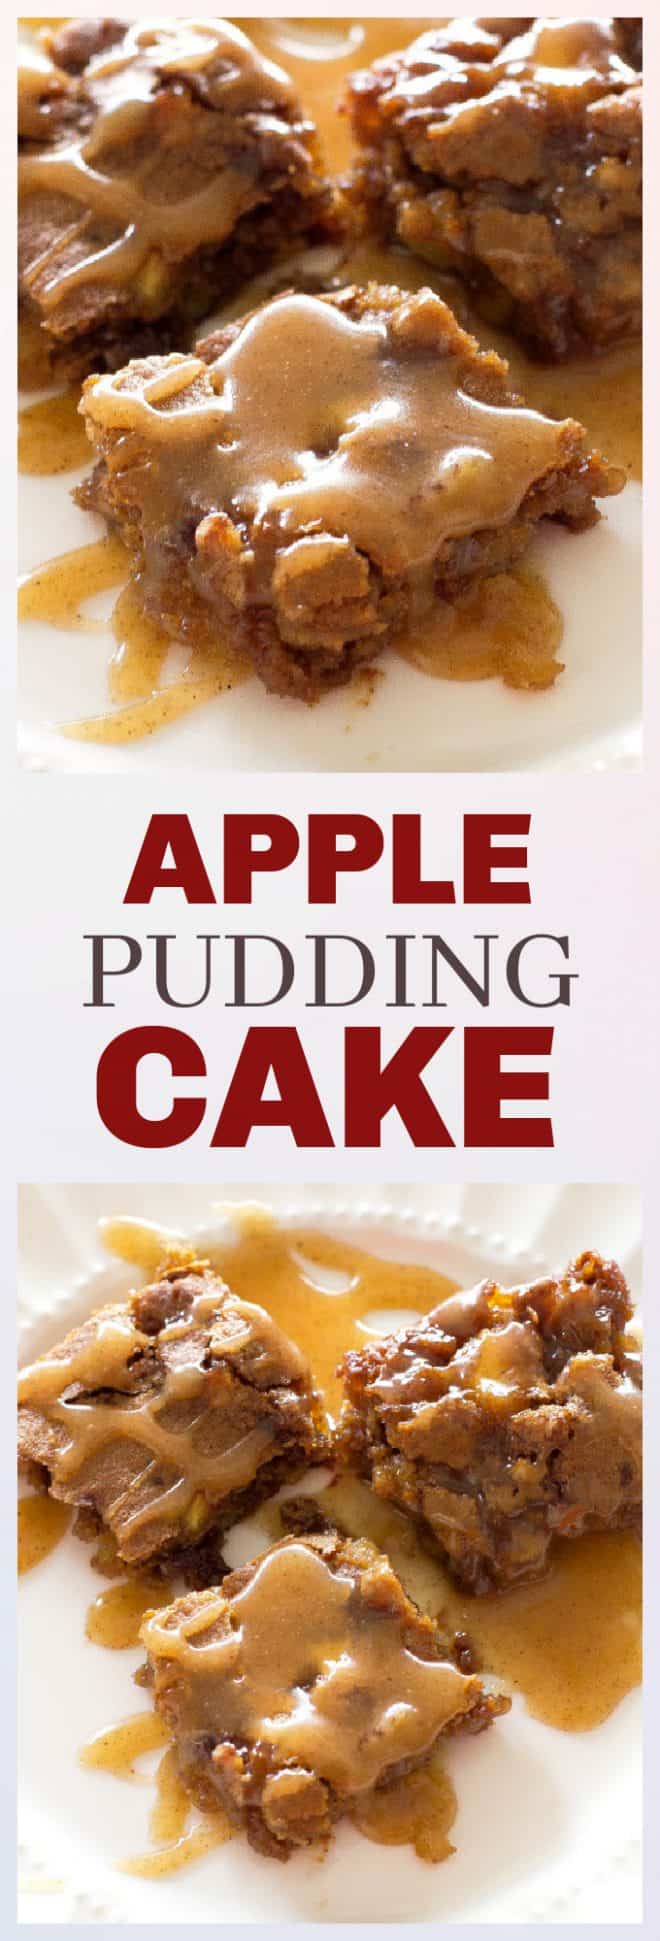 Apple Pudding Cake